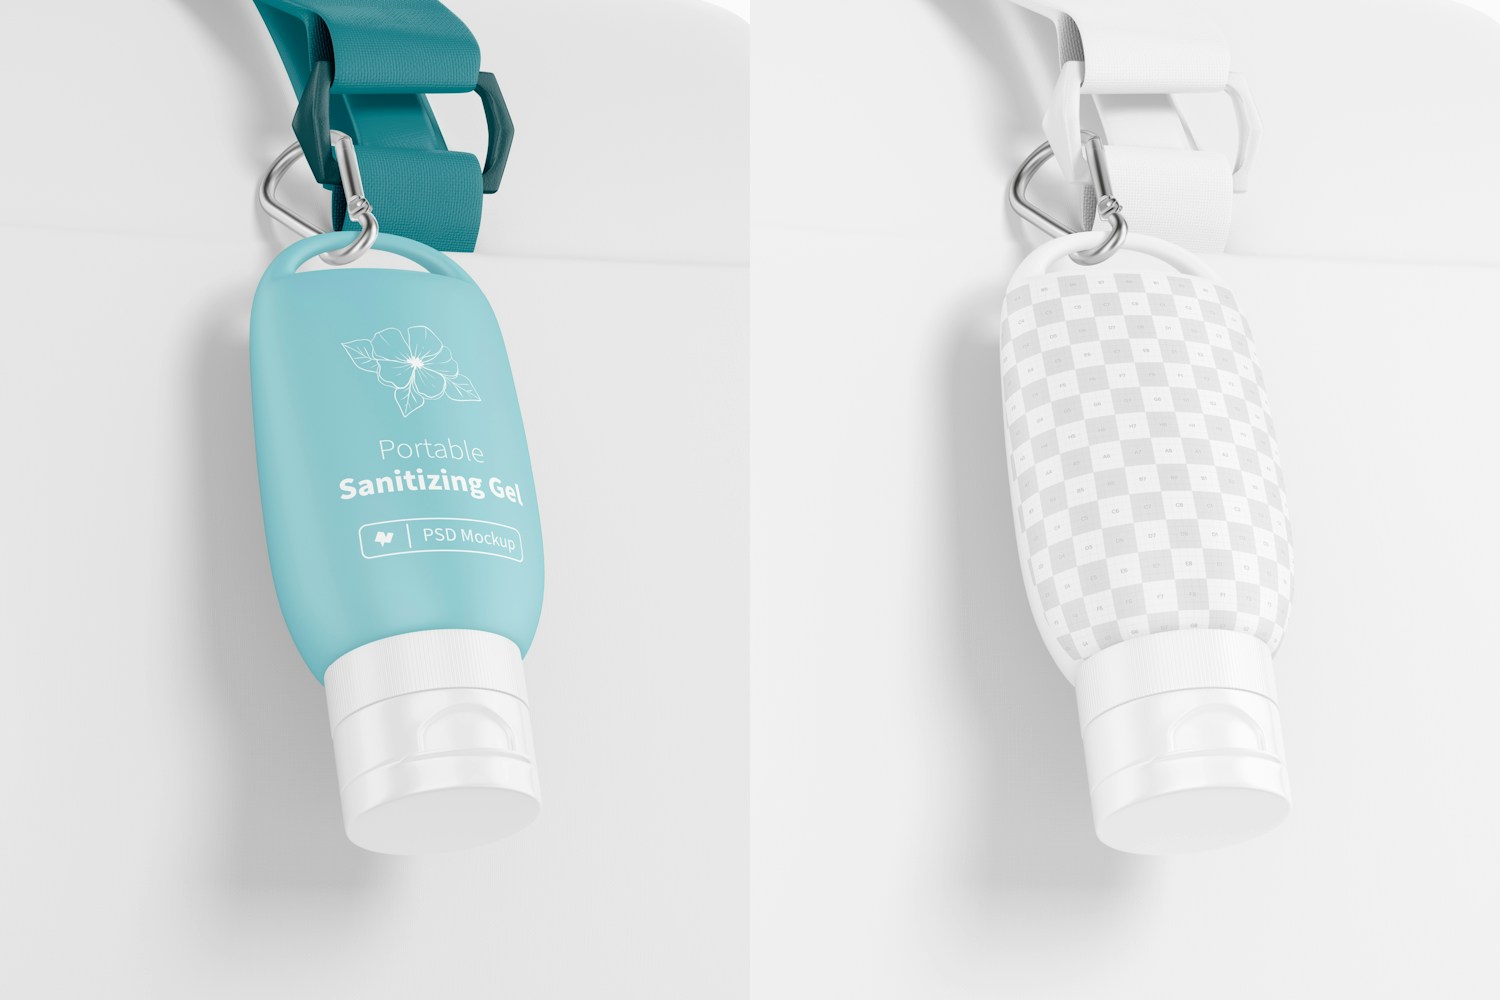 Portable Sanitizing Gel with Keychain on Bag Mockup